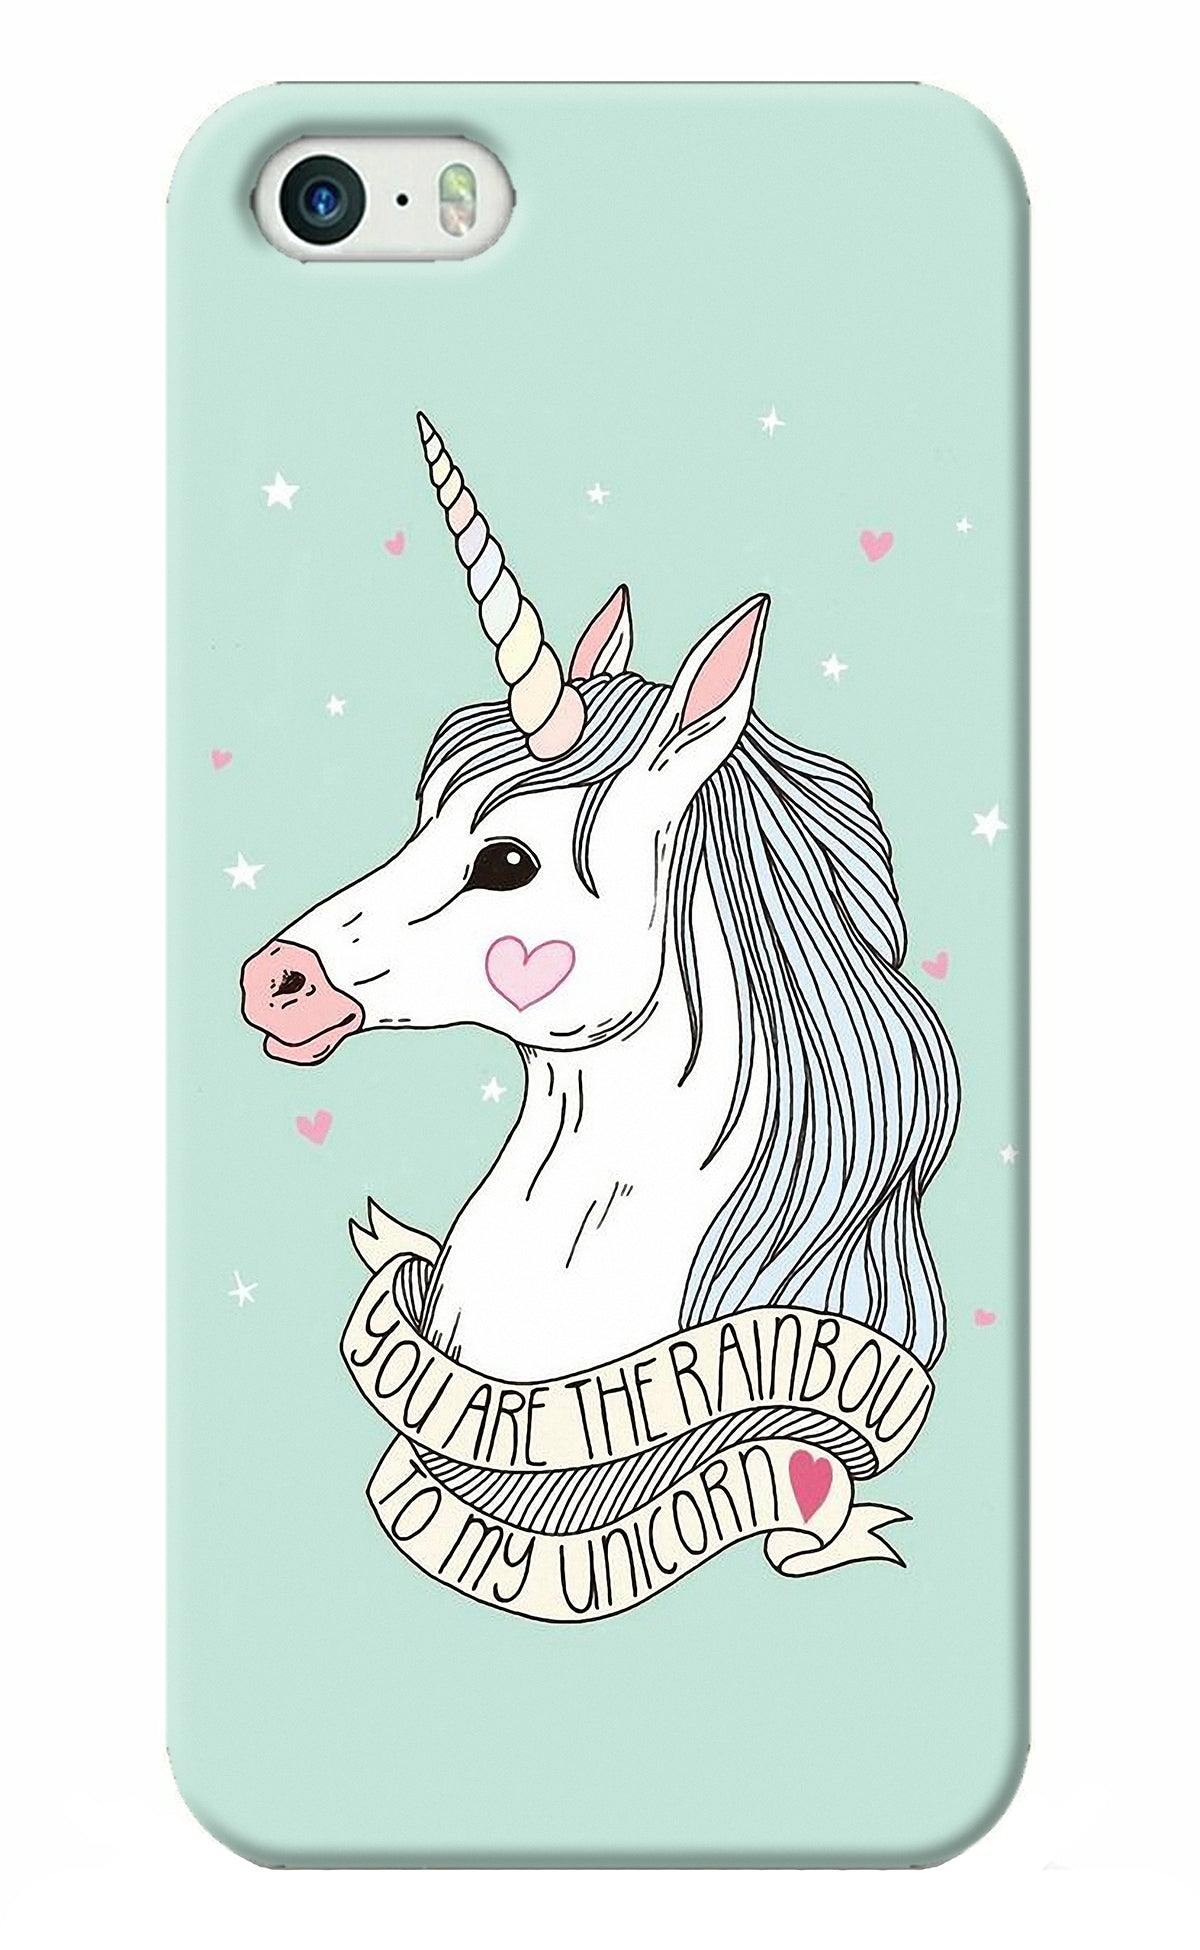 Unicorn Wallpaper iPhone 5/5s Back Cover